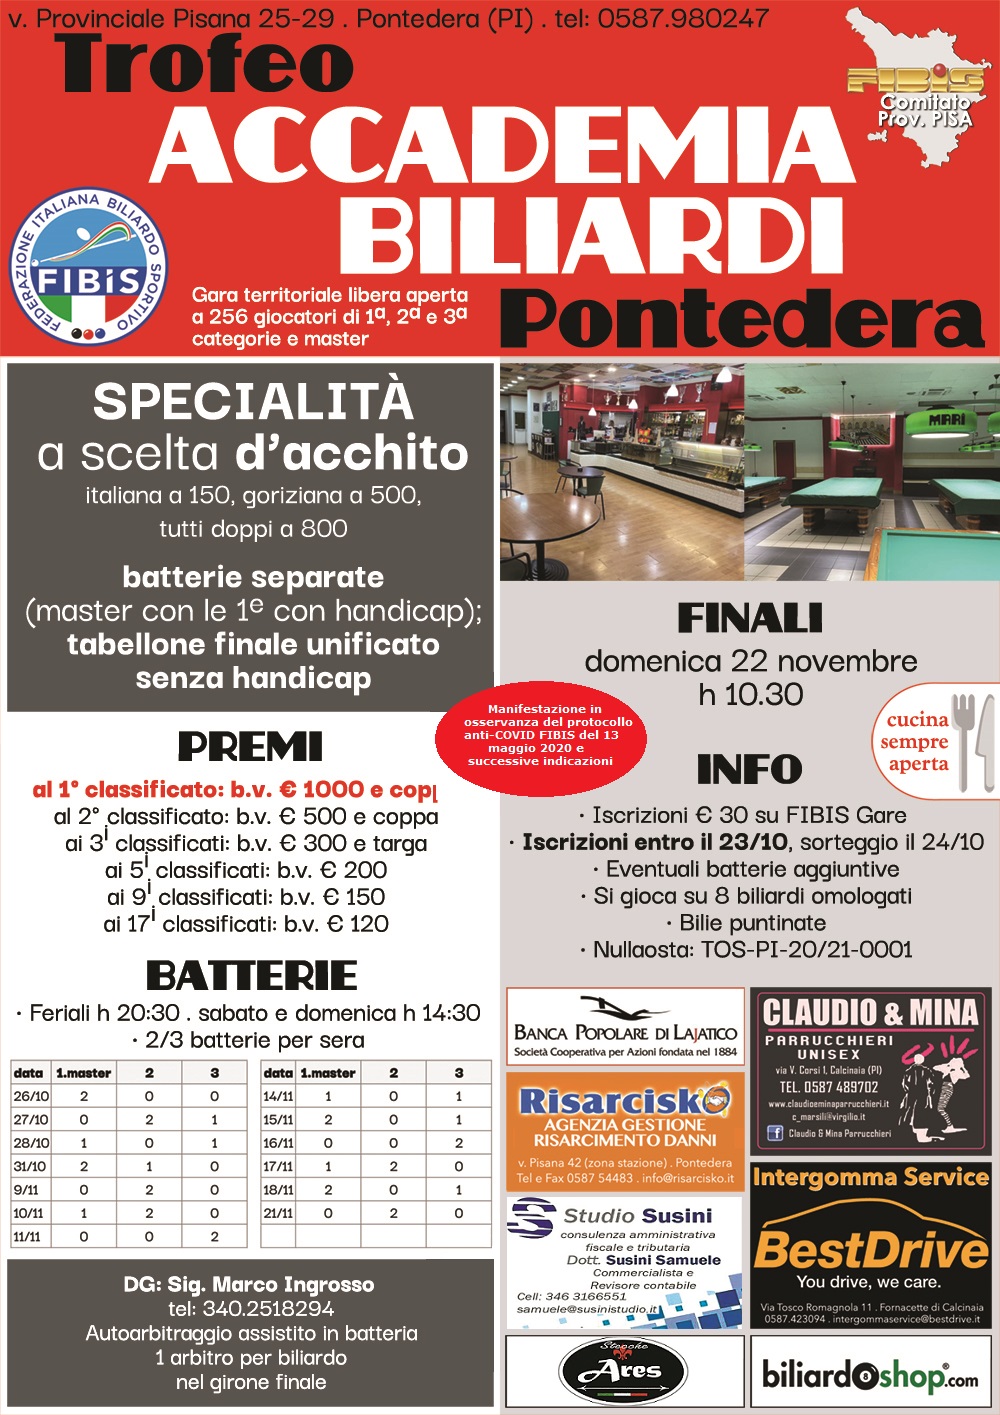 Trofeo Accademia Biliardi Pontedera